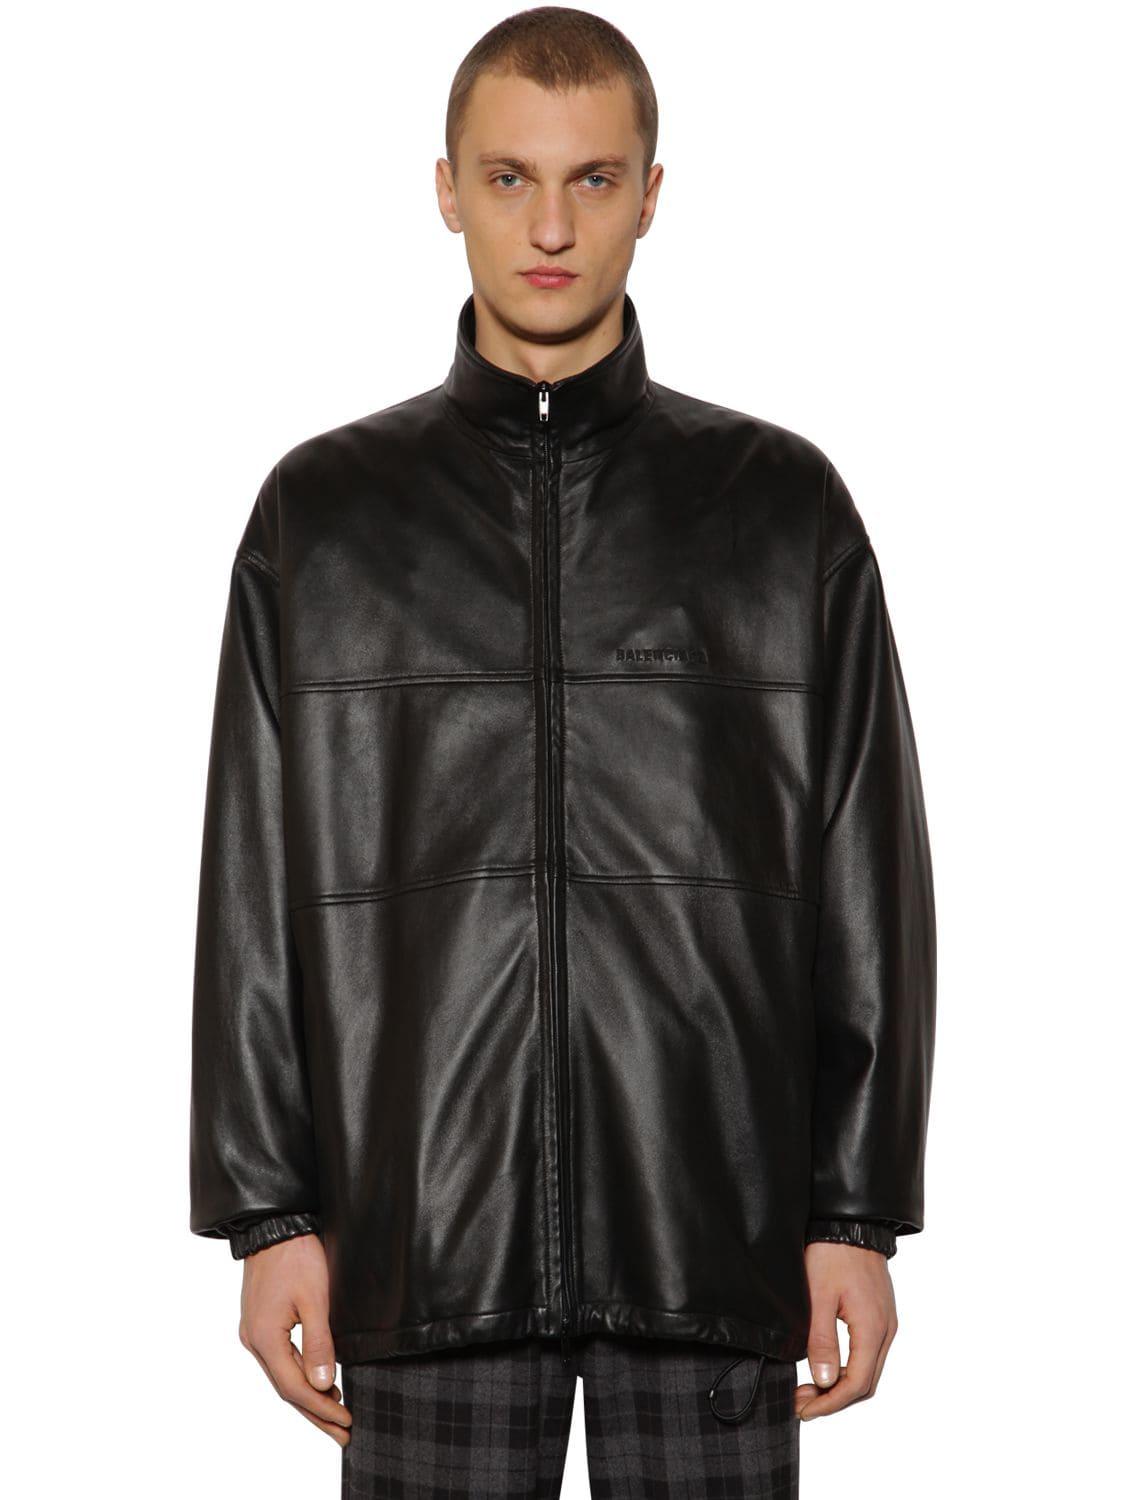 Balenciaga Logo Zip-up Leather Jacket in Black for Men - Lyst